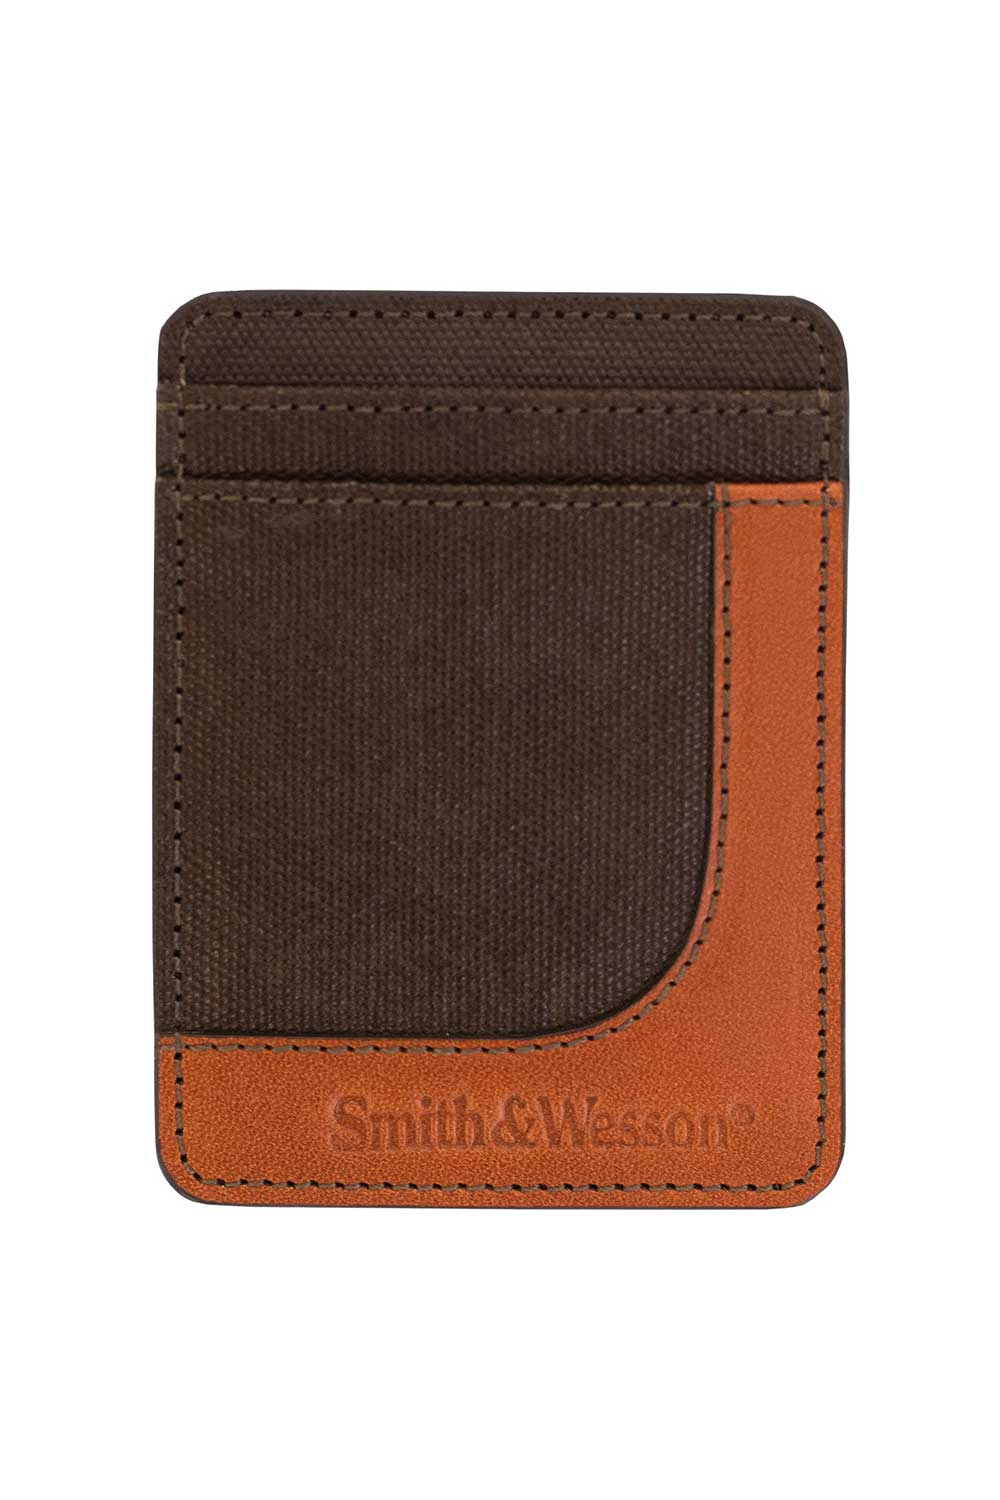 Smith & Wesson Wax Canvas Wallet